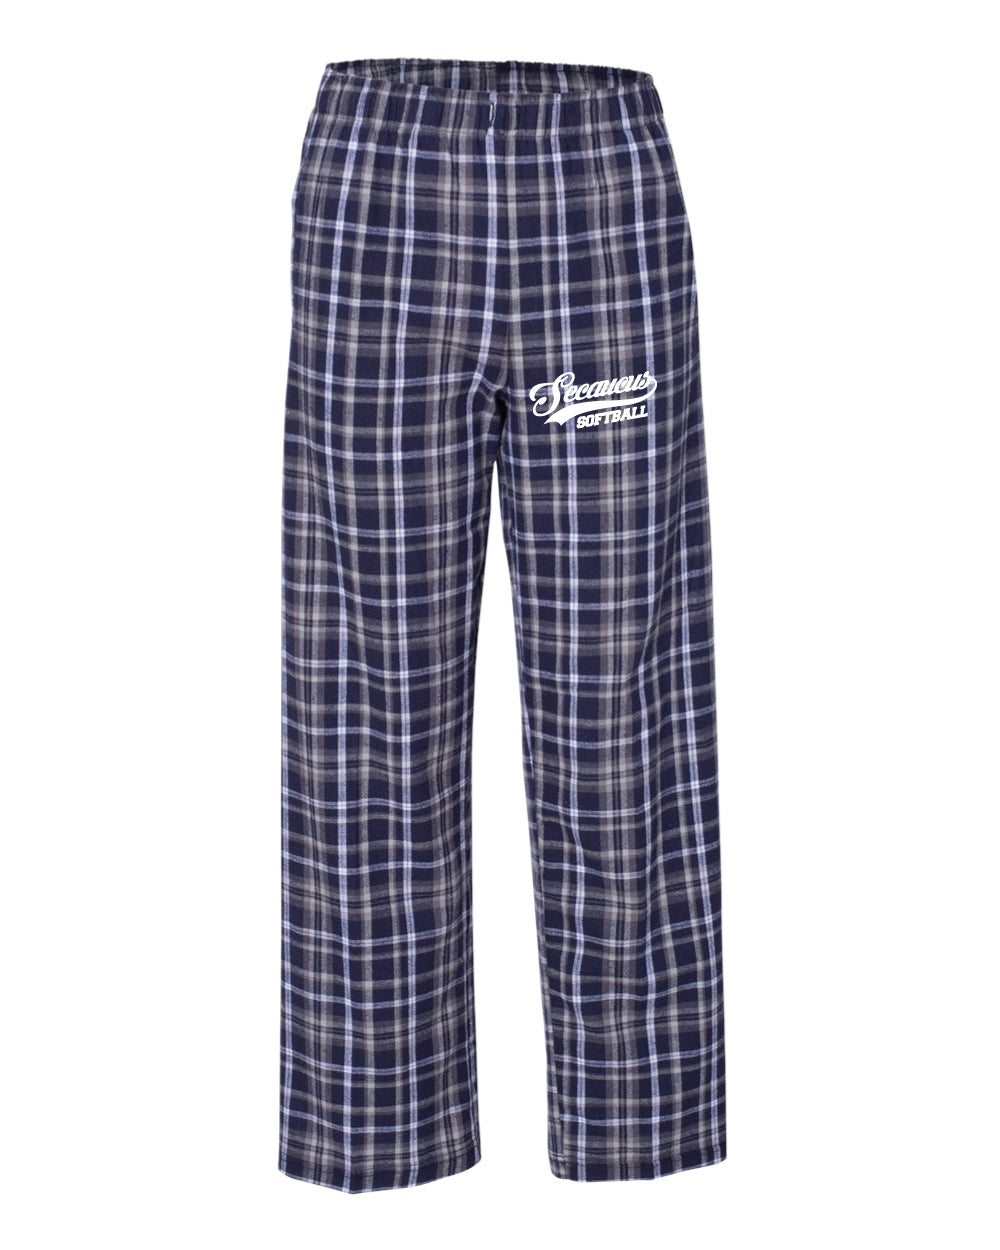 Secaucus Softball Flannel Pajama Pants - Navy Plaid